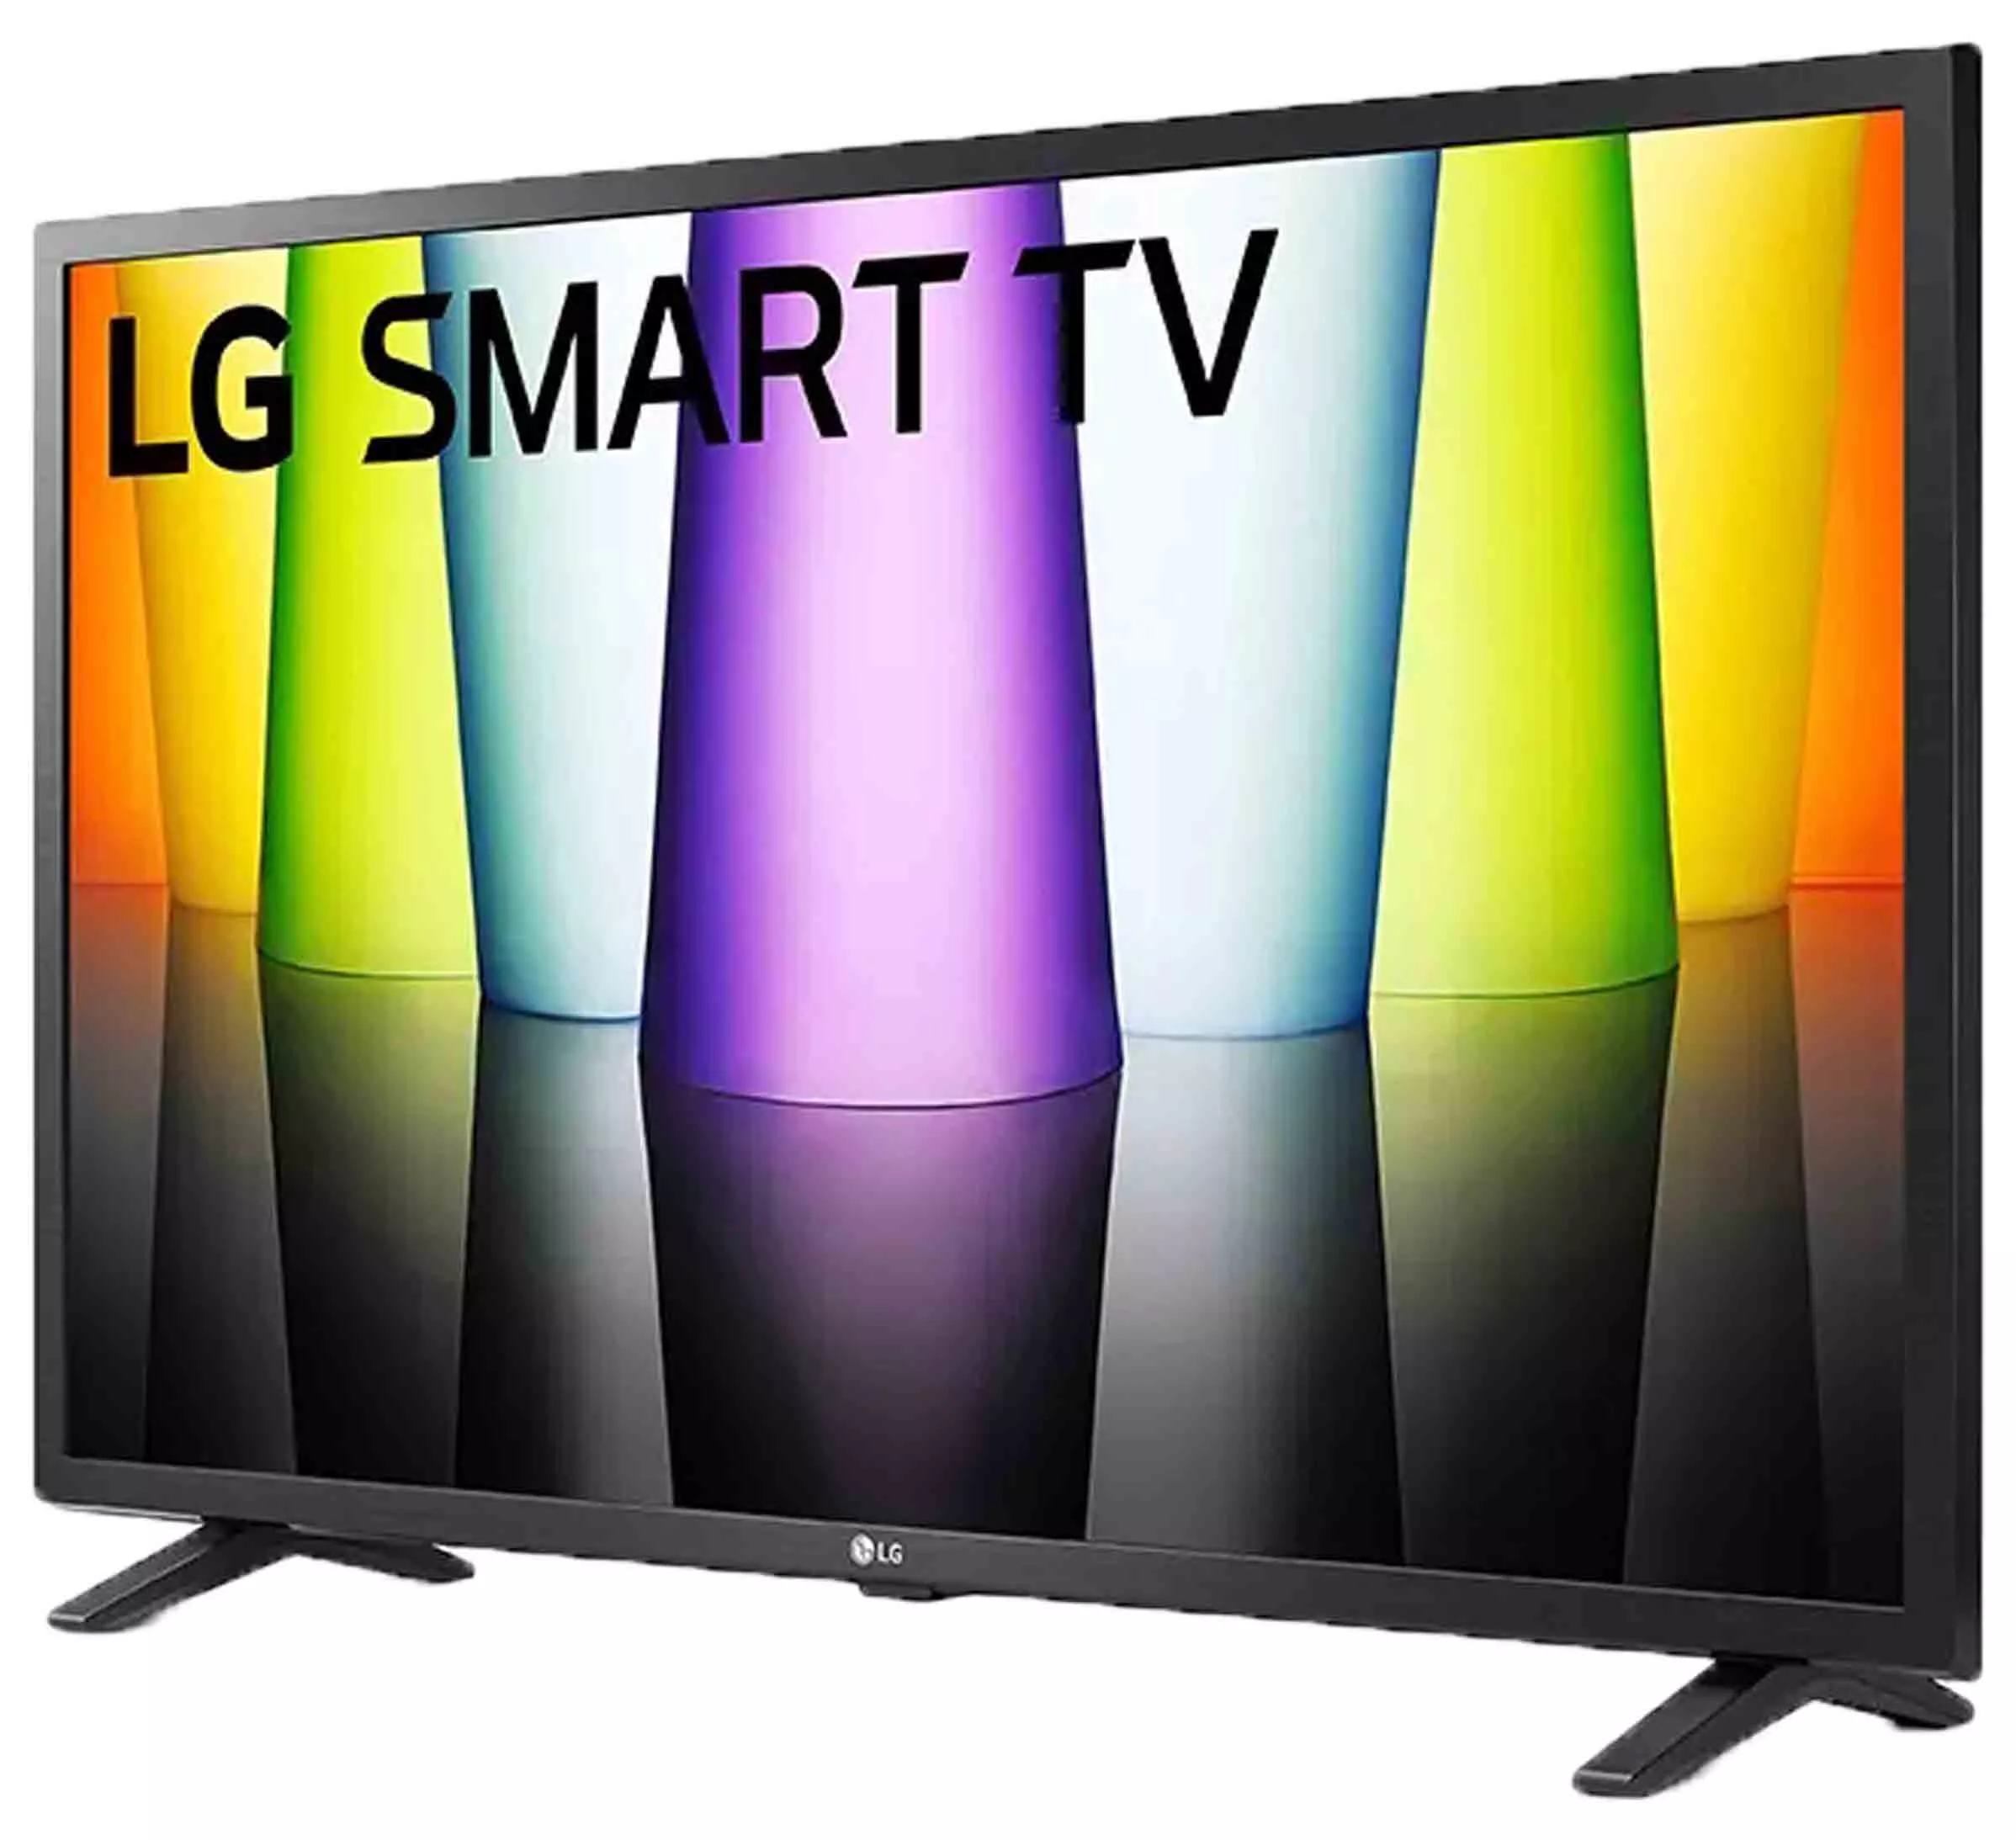 LG Televisor LED 32”│HD SMART TV│Thinq Quad  Core